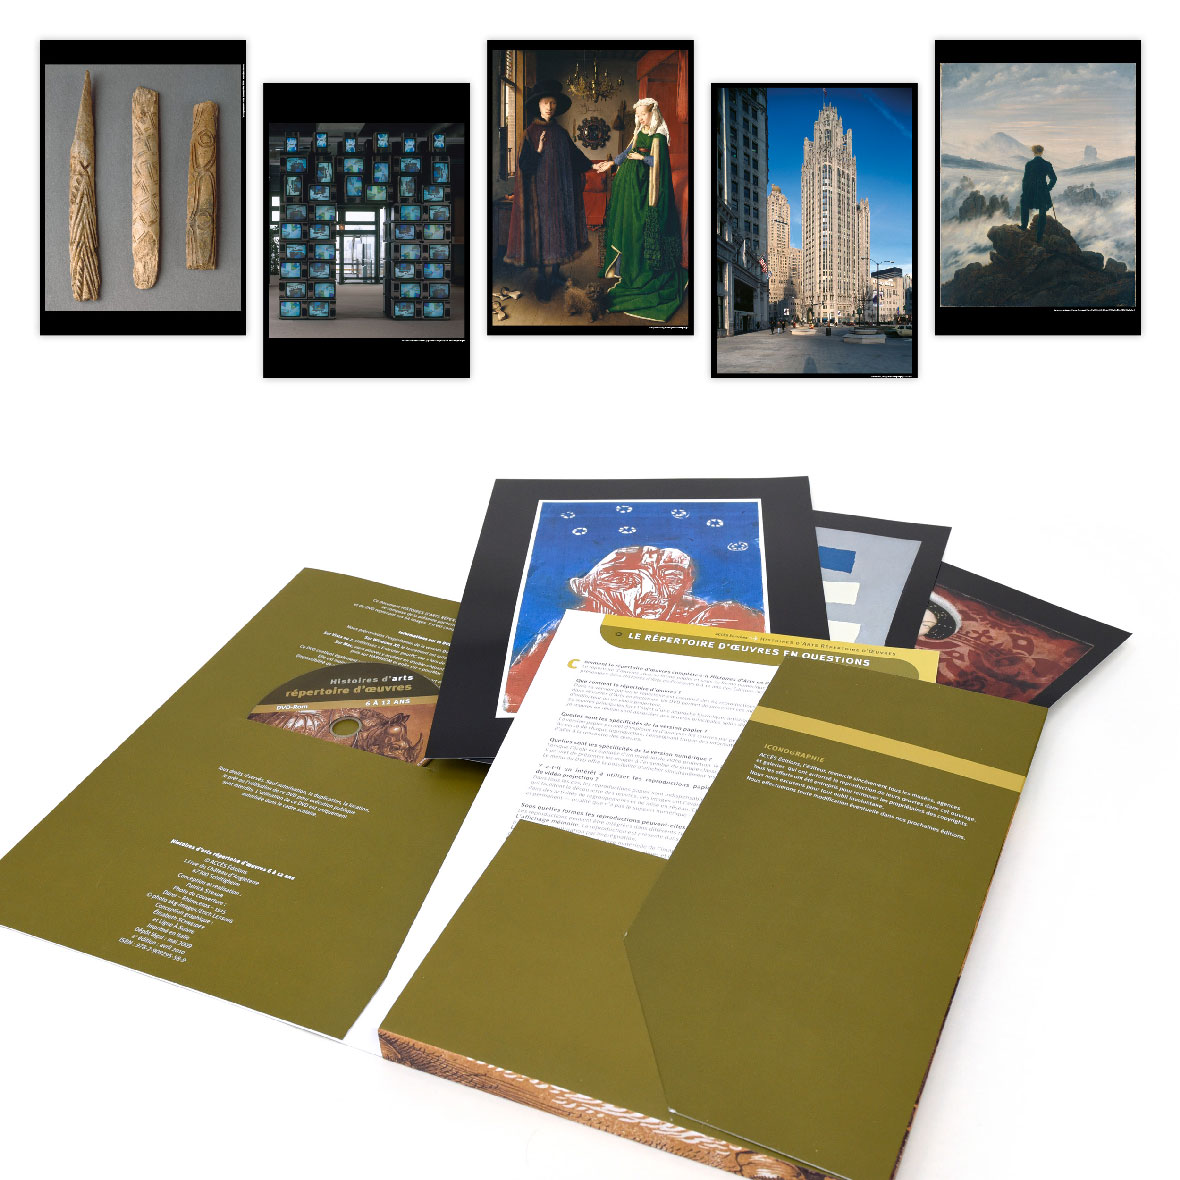 Histoires d arts repertoire d oeuvres miniature 4 acces editions